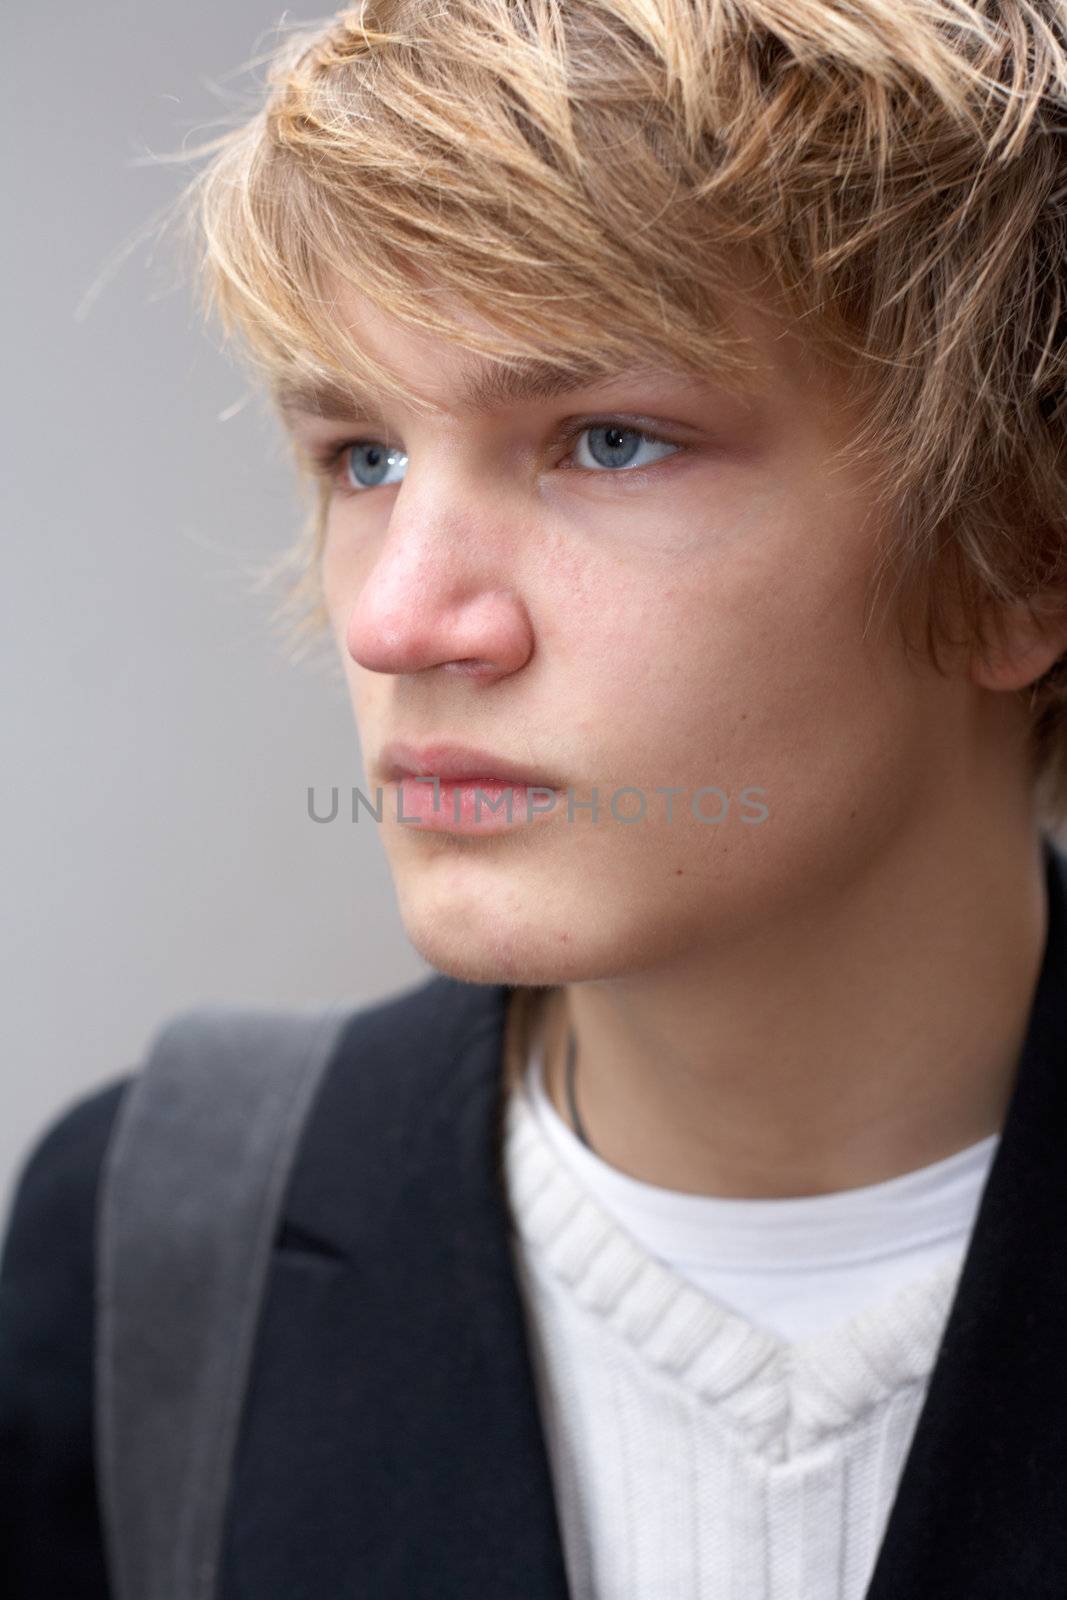 Exterior portrait of serious teenage boy, close-up